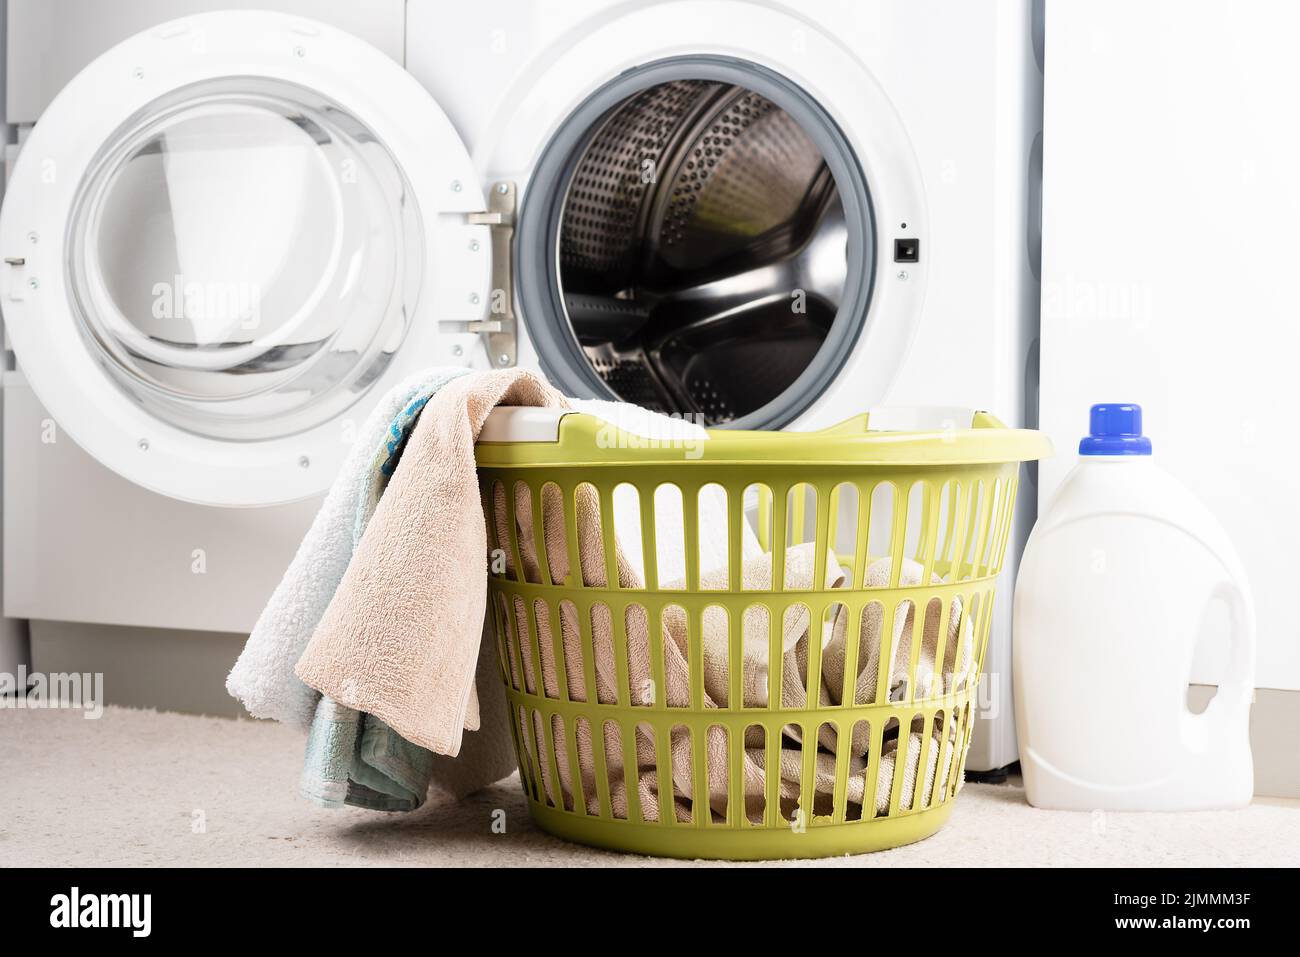 Laundry basket, liquid detergent and washing machine. Stock Photo